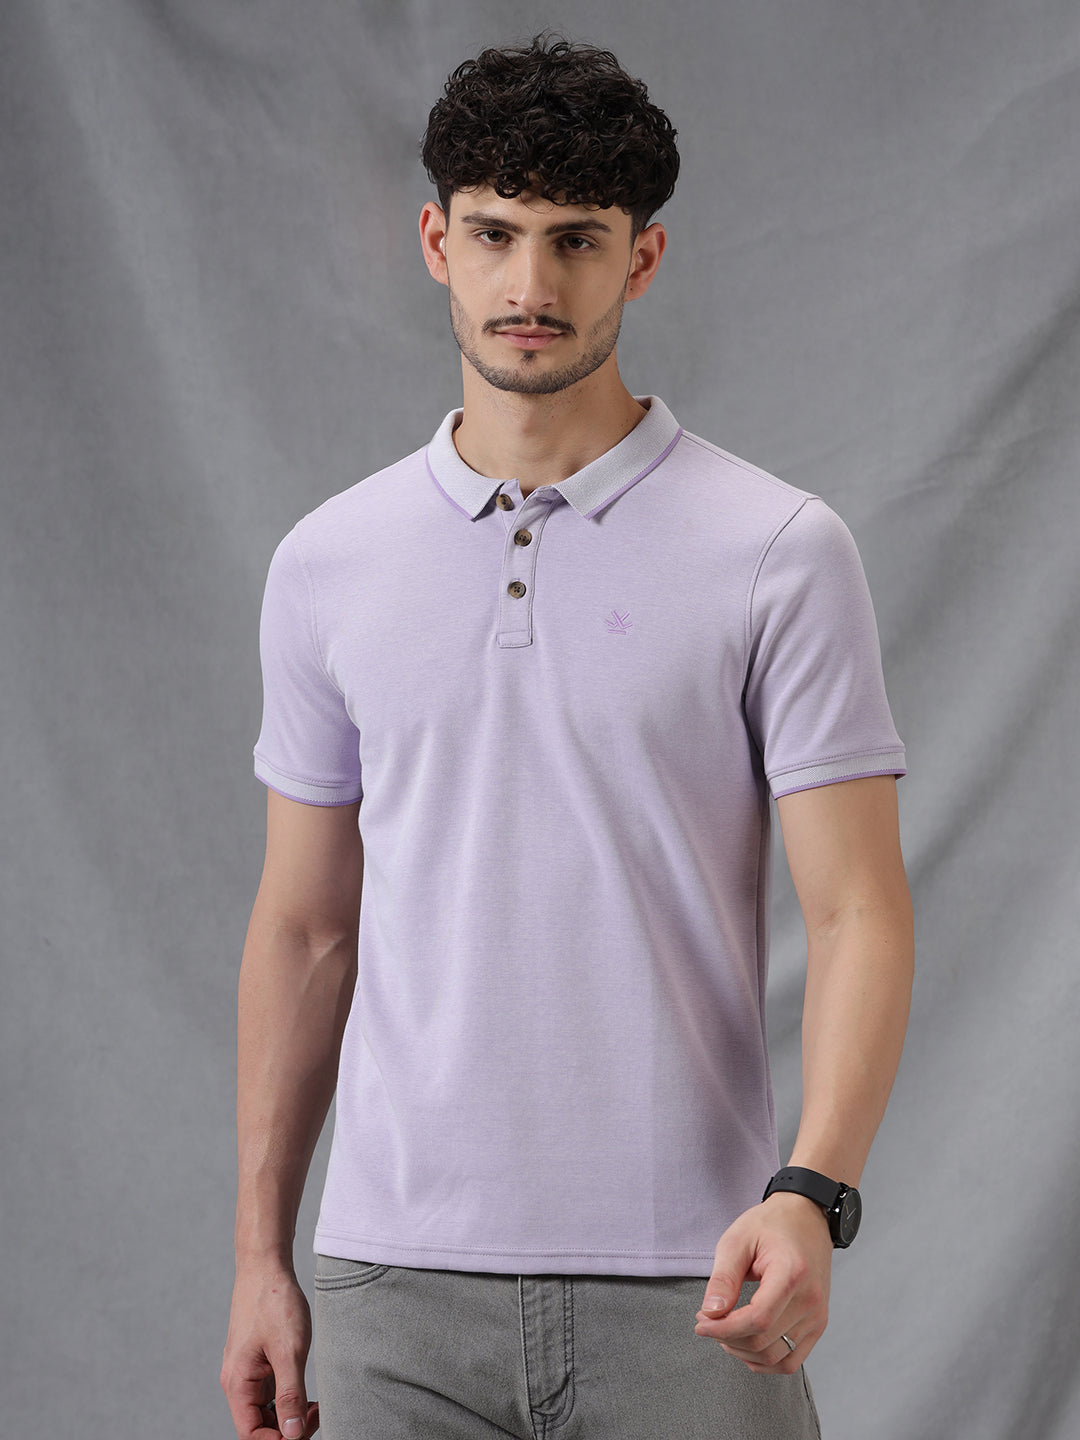 Dual Tone Lavender Polo T-Shirt